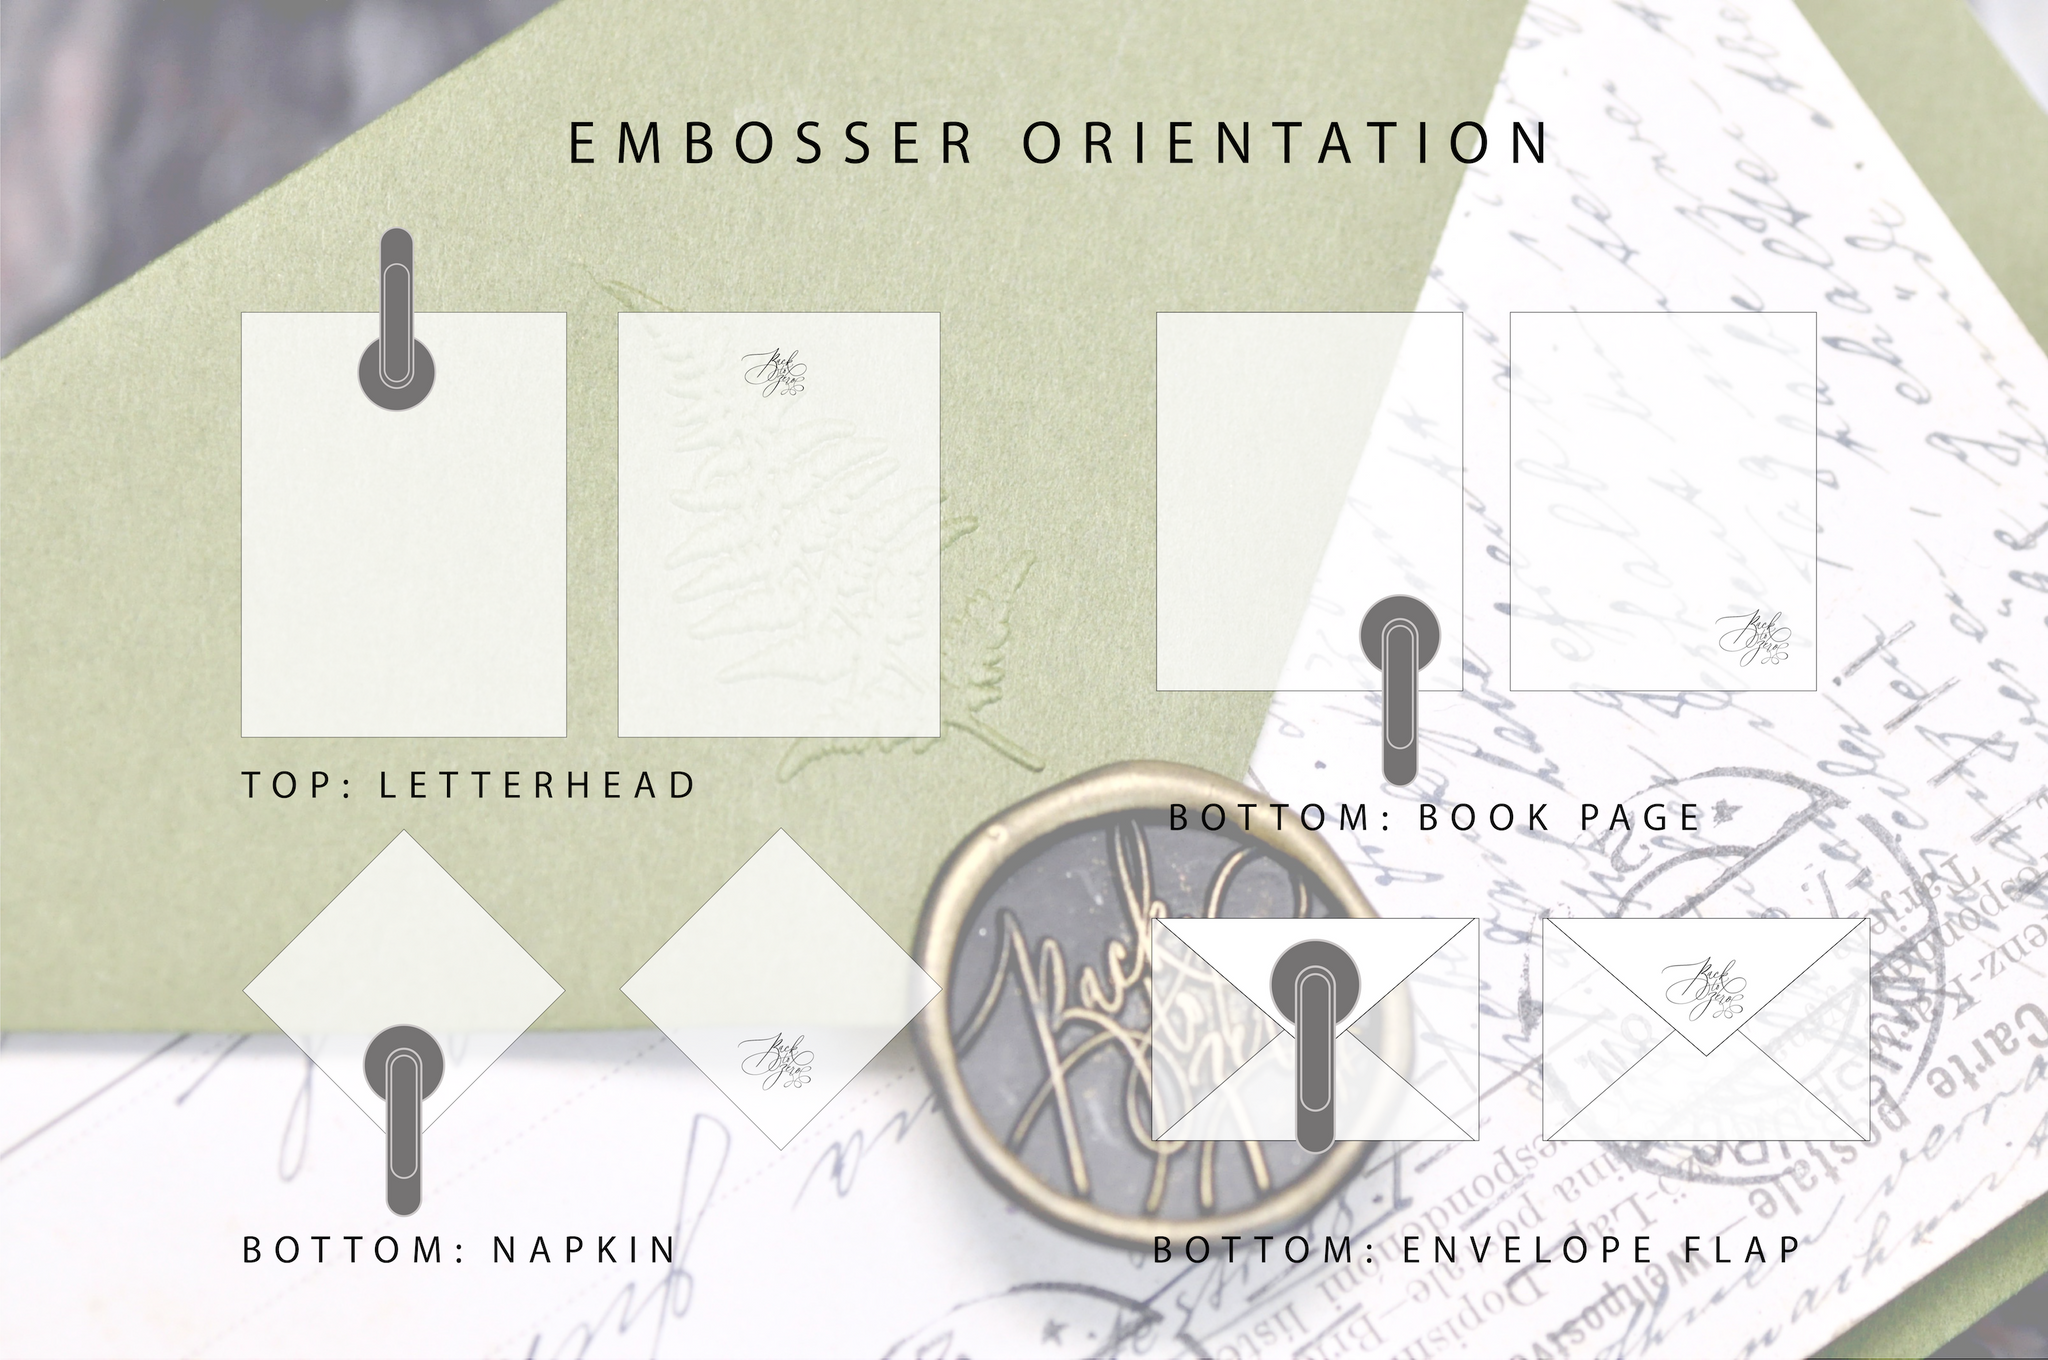 Elegant Three Initial Monogram Return Address Stamp – Meredith Collie Paper  & Design